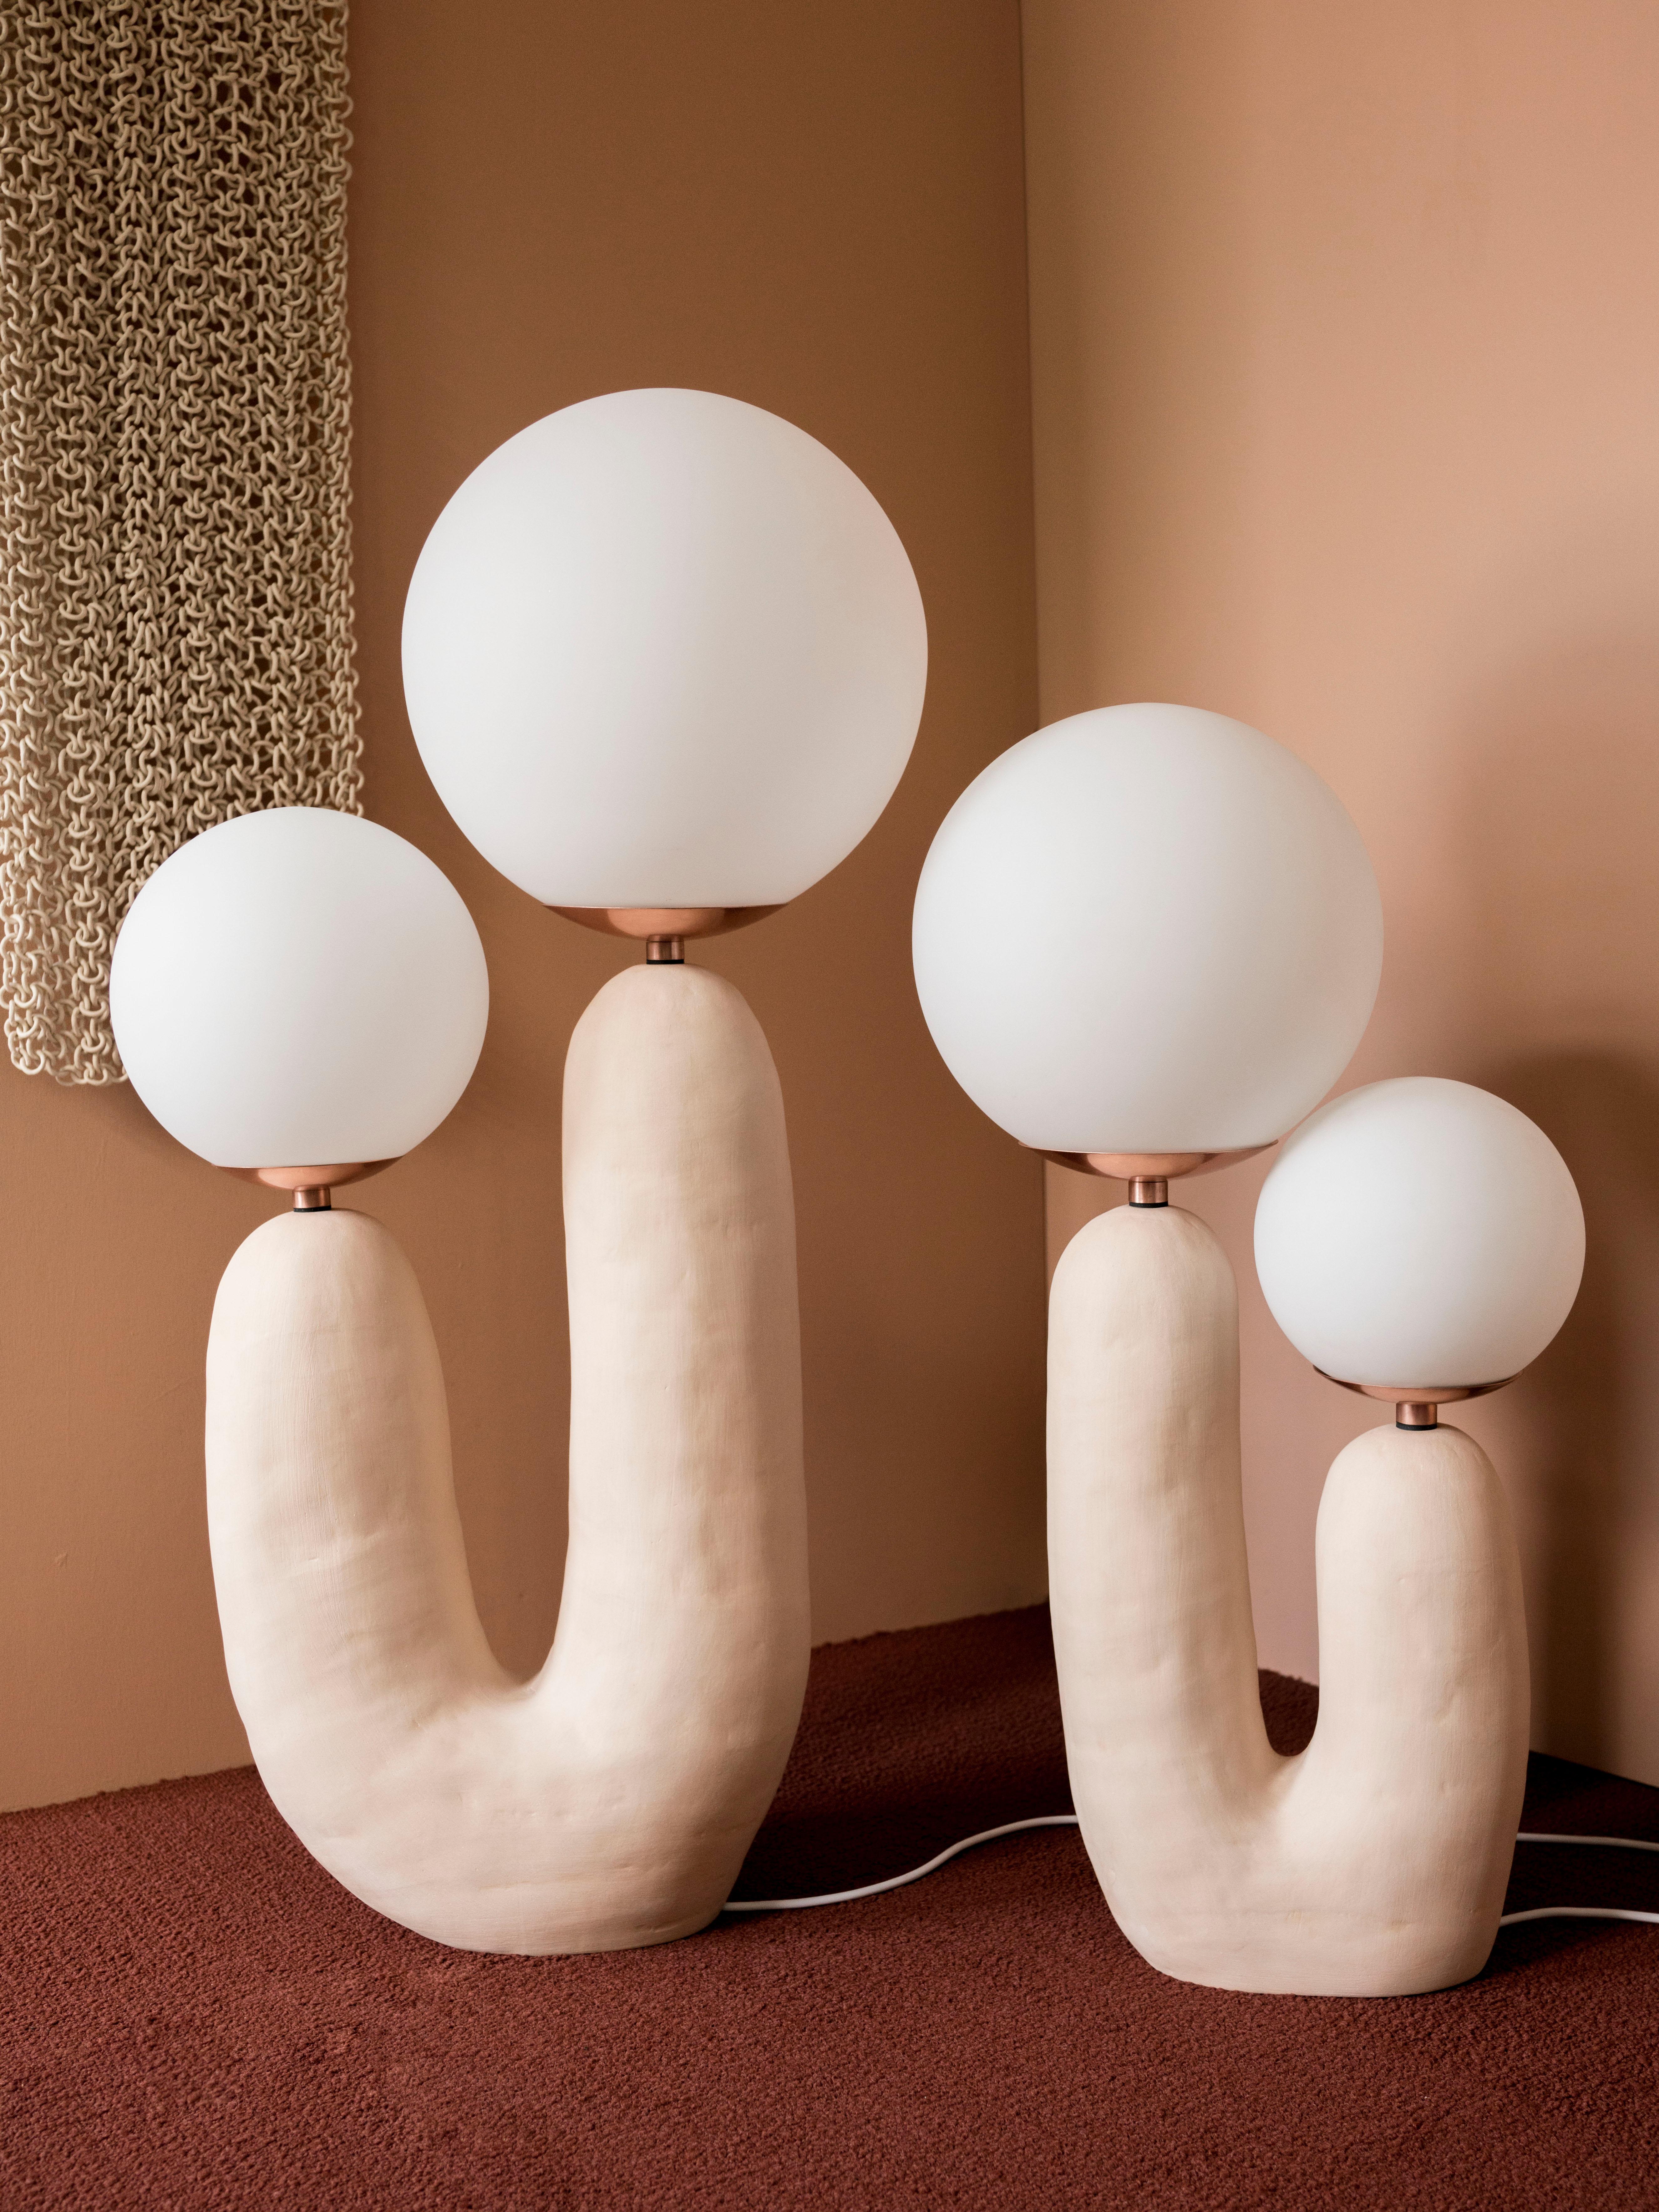 Contemporary Hand-built Ceramic Base Oo Lamp - Skin Tone #1, Medium For Sale 1